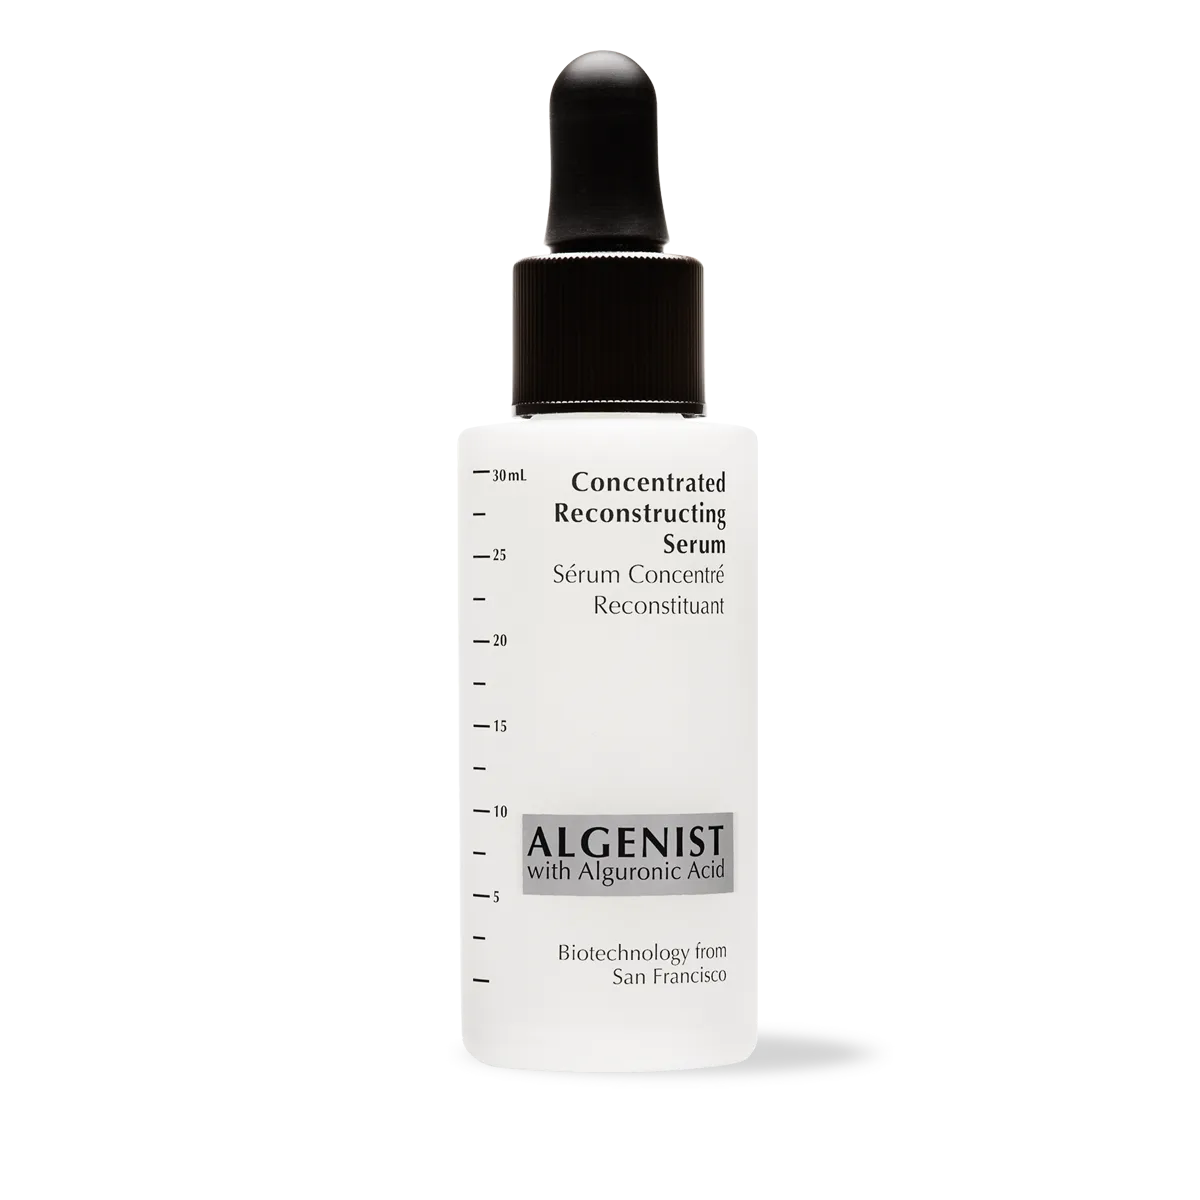 New Algenist skincare products photo 1